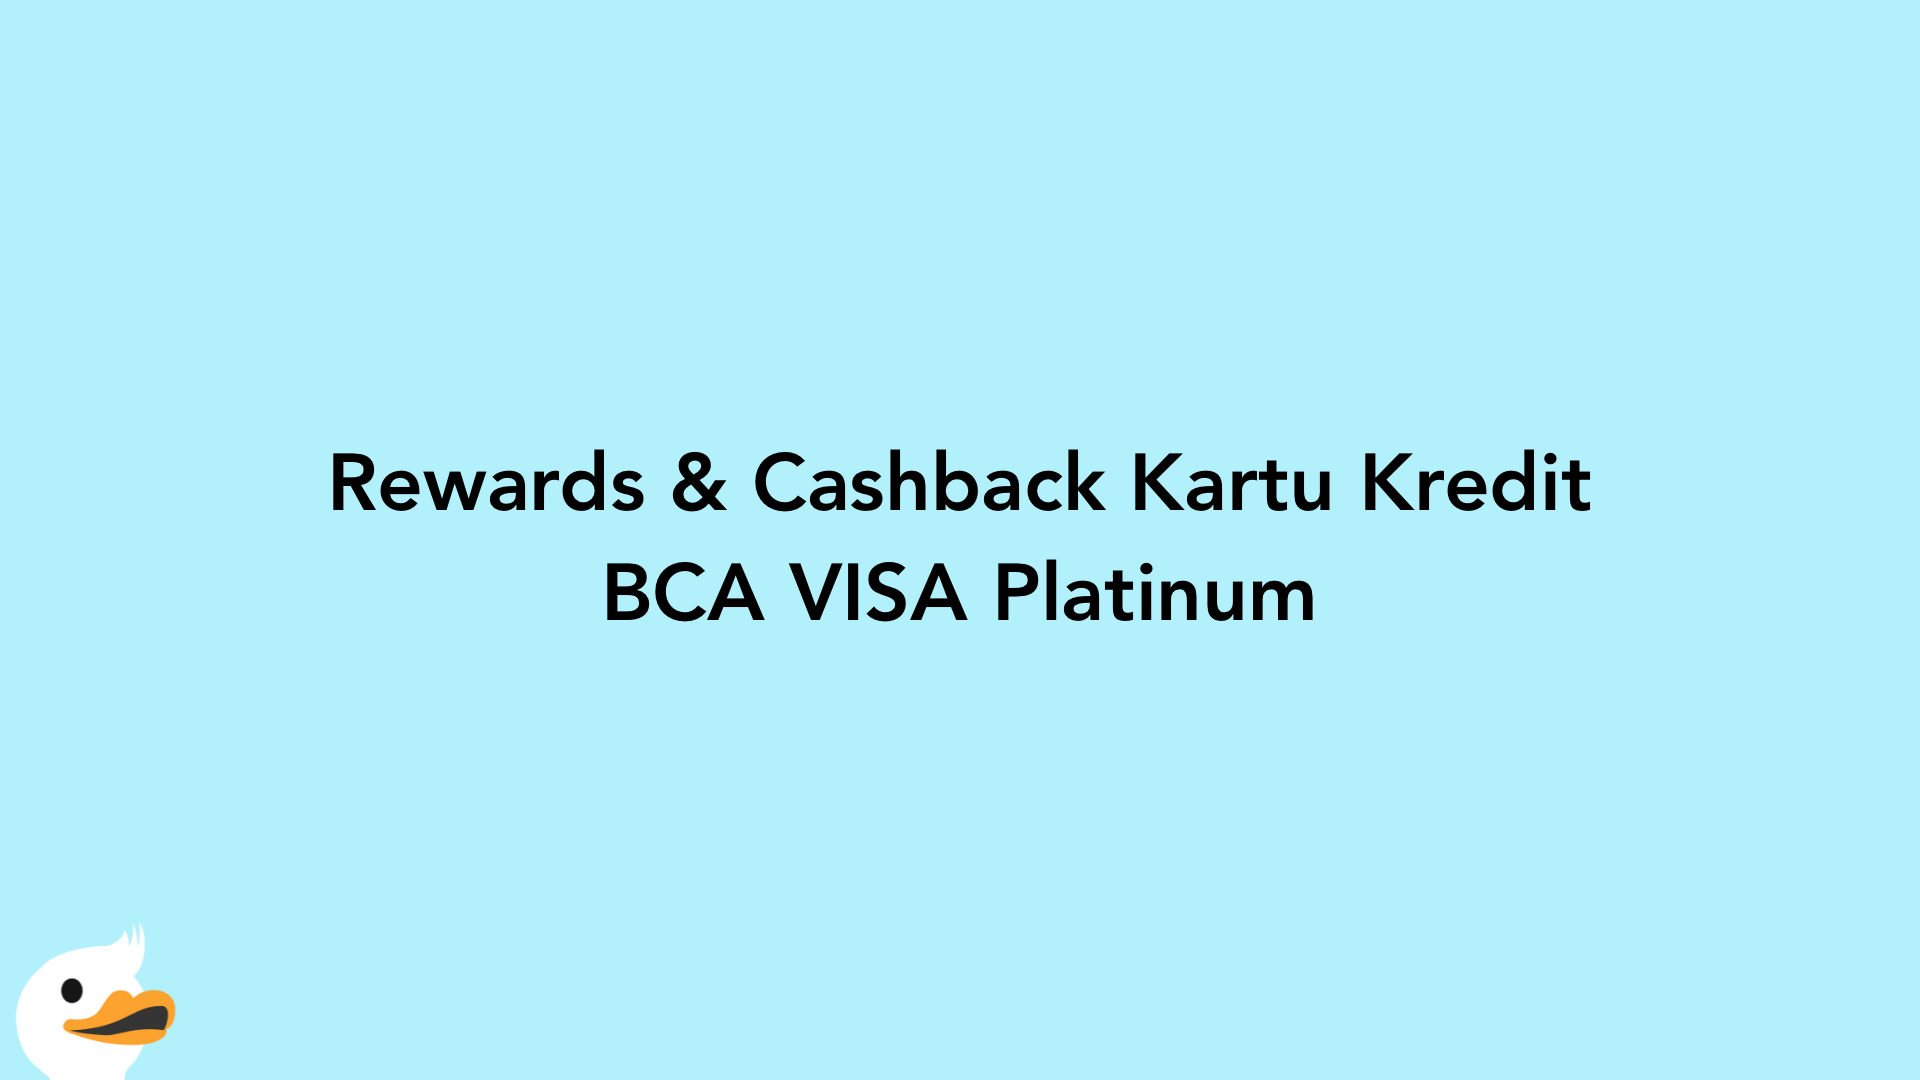 Rewards & Cashback Kartu Kredit BCA VISA Platinum